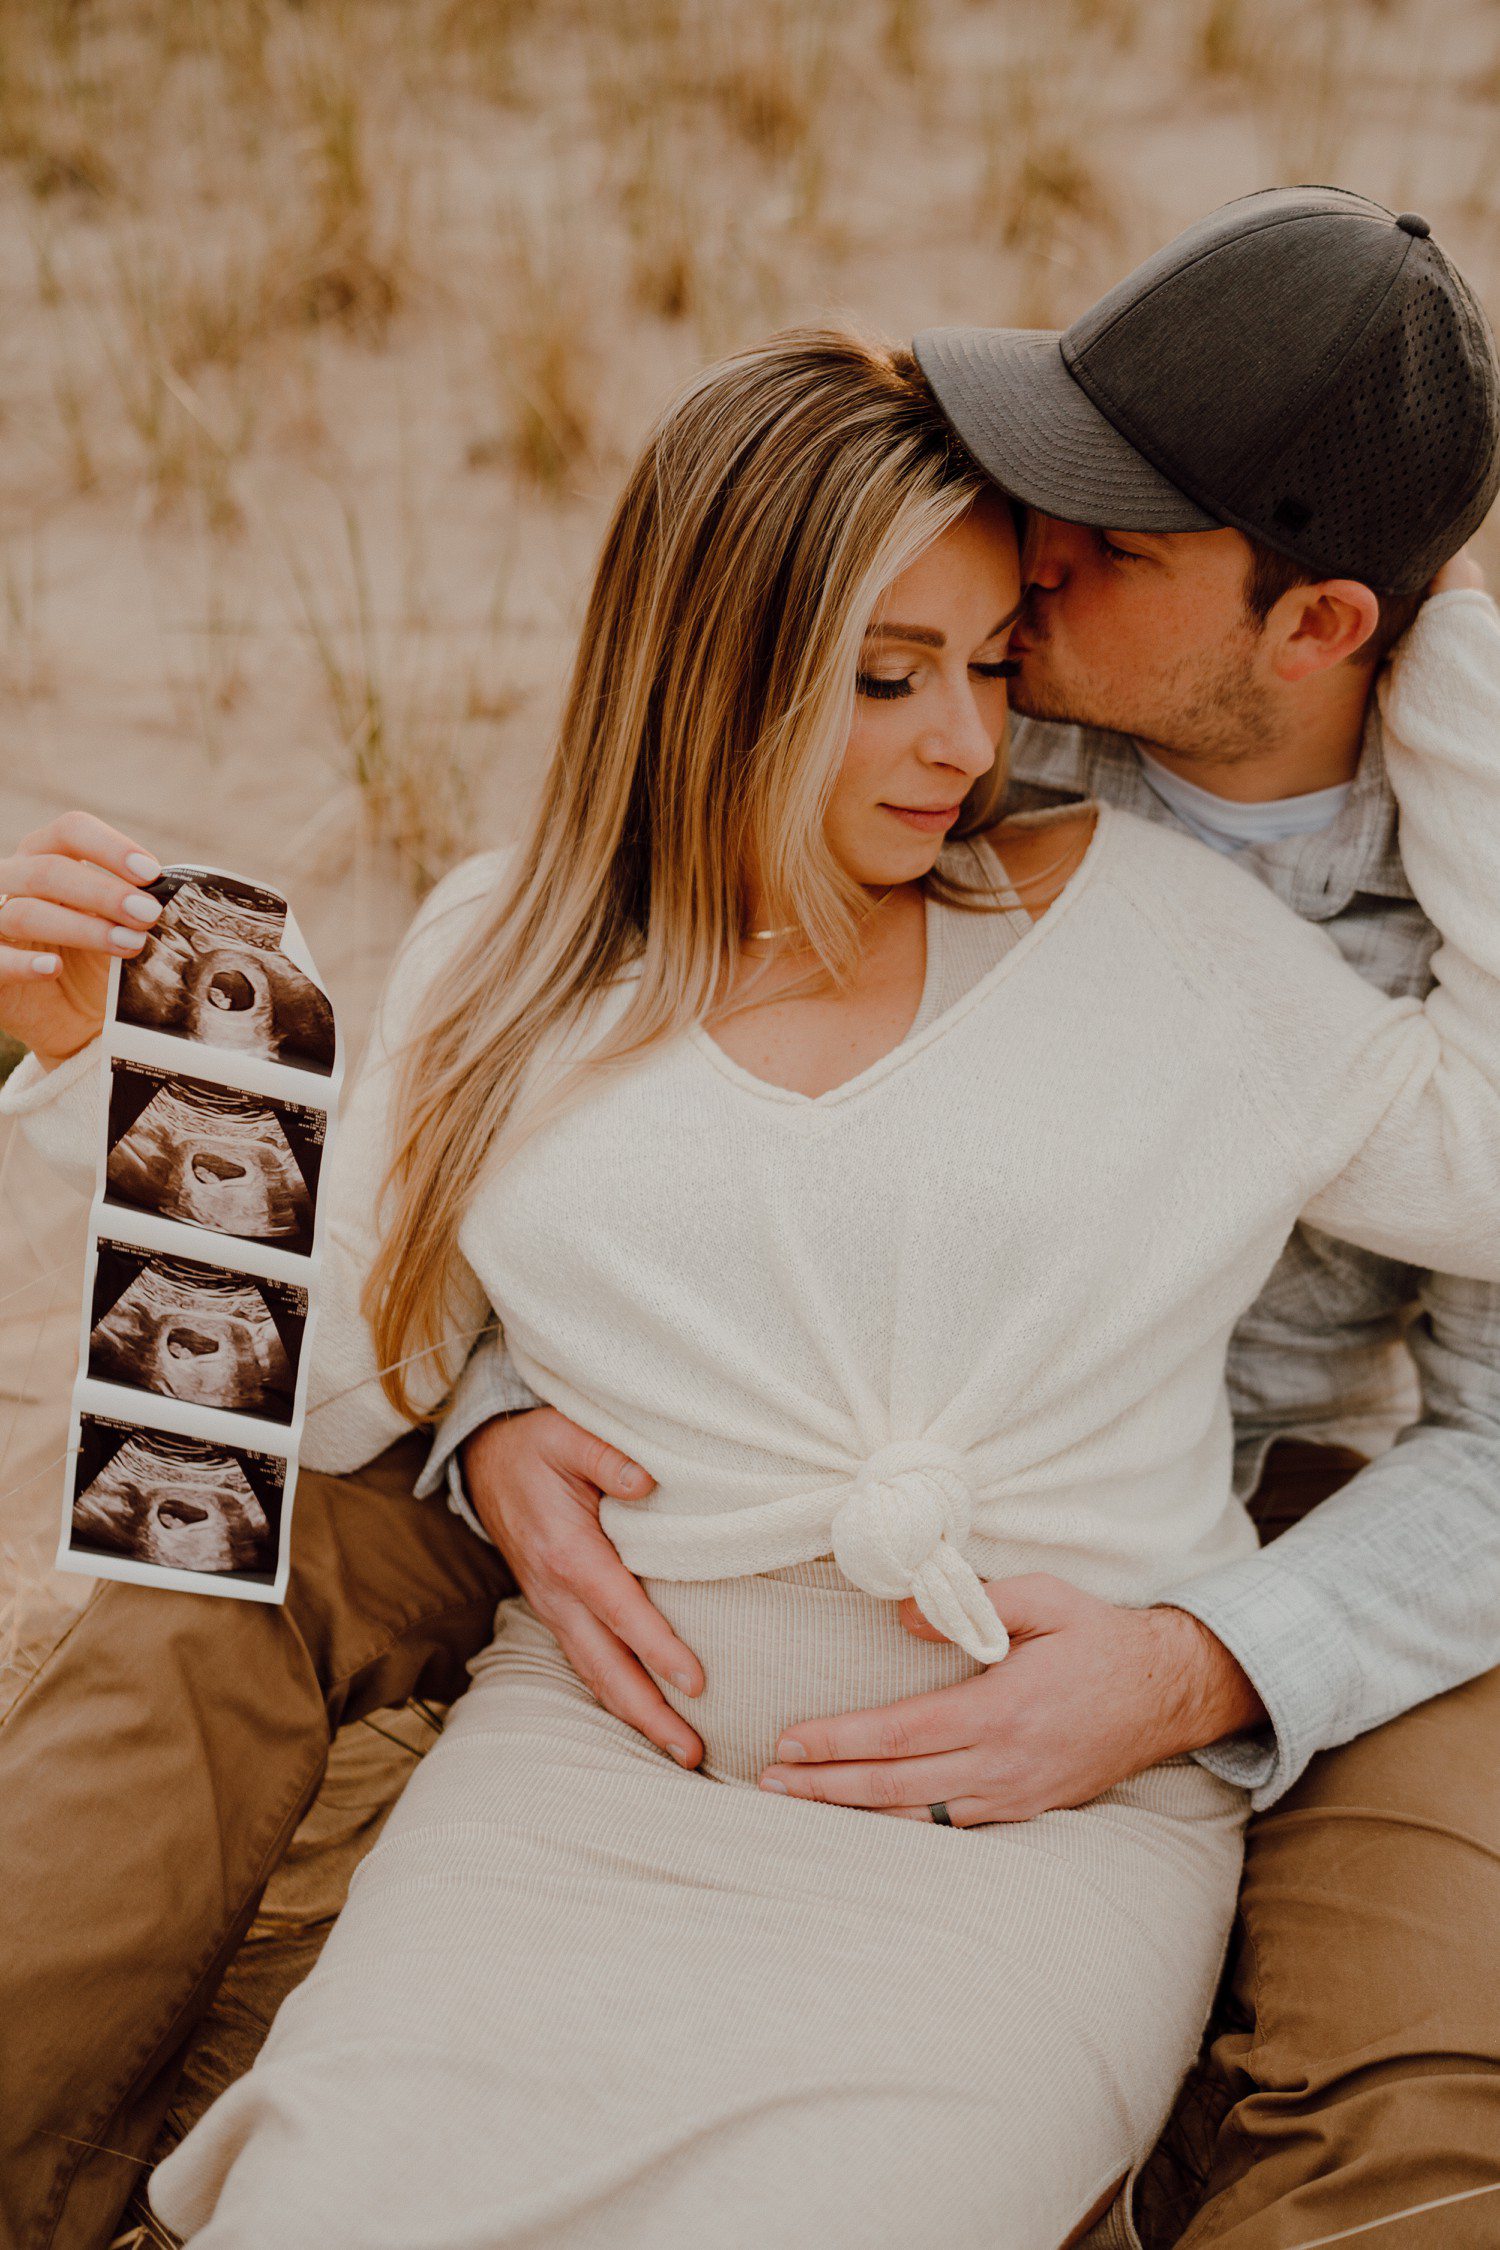 Pregnancy announcement photos with sonogram. 